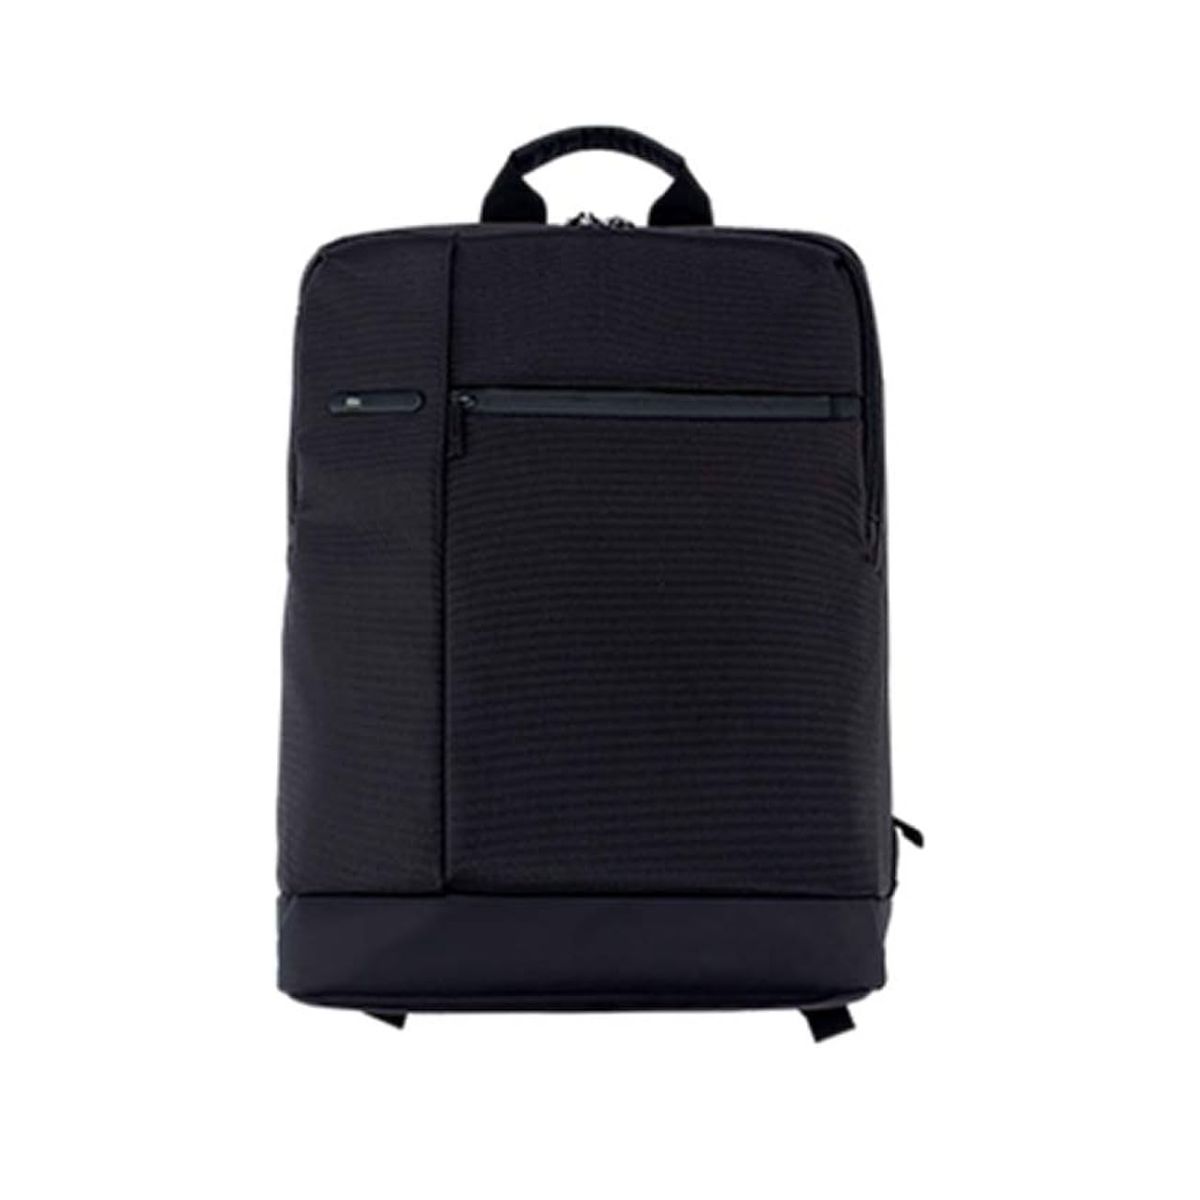 Xiaomi Mi Business Backpack - Black